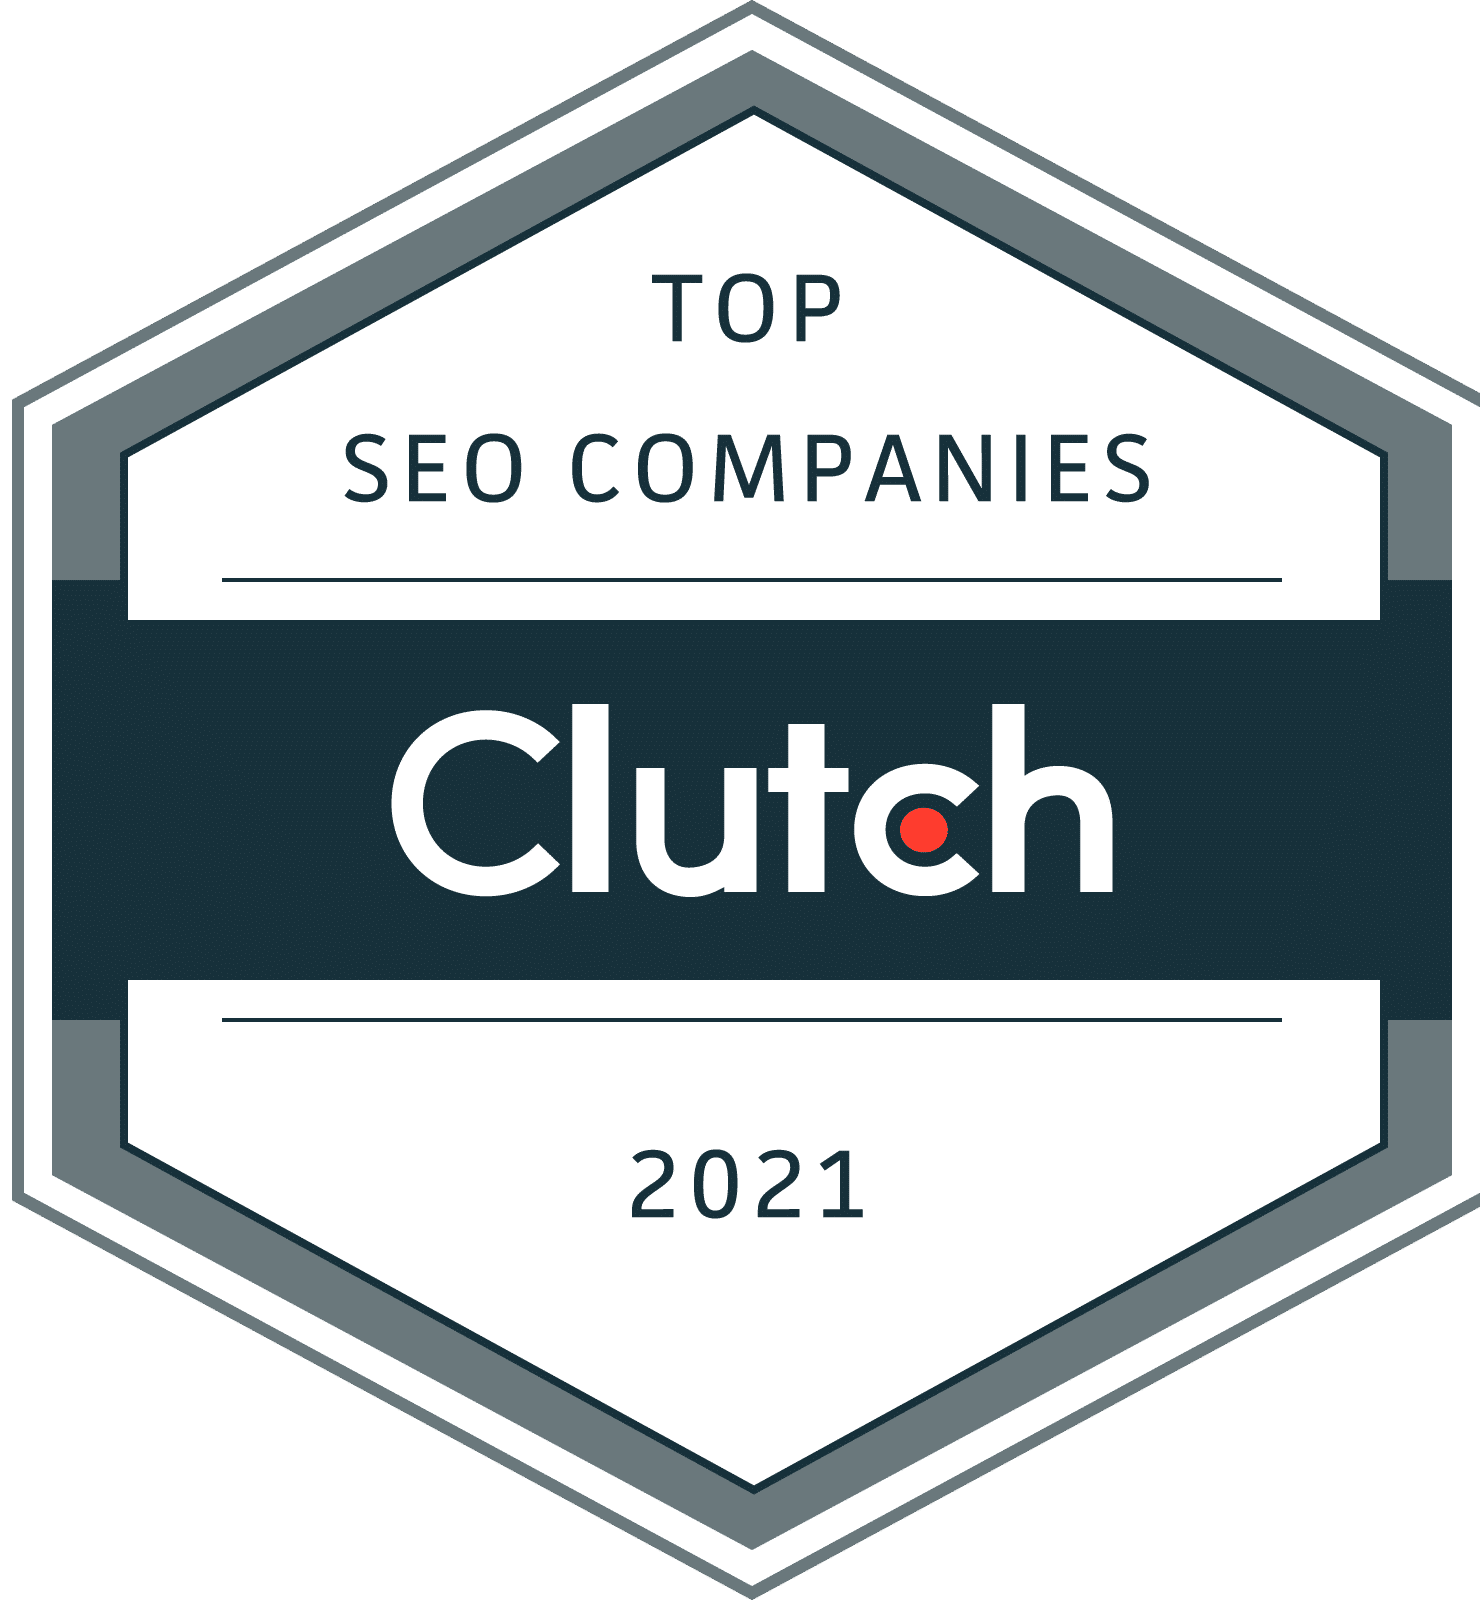 Top SEO Companies worldwide 2021 by Clutch